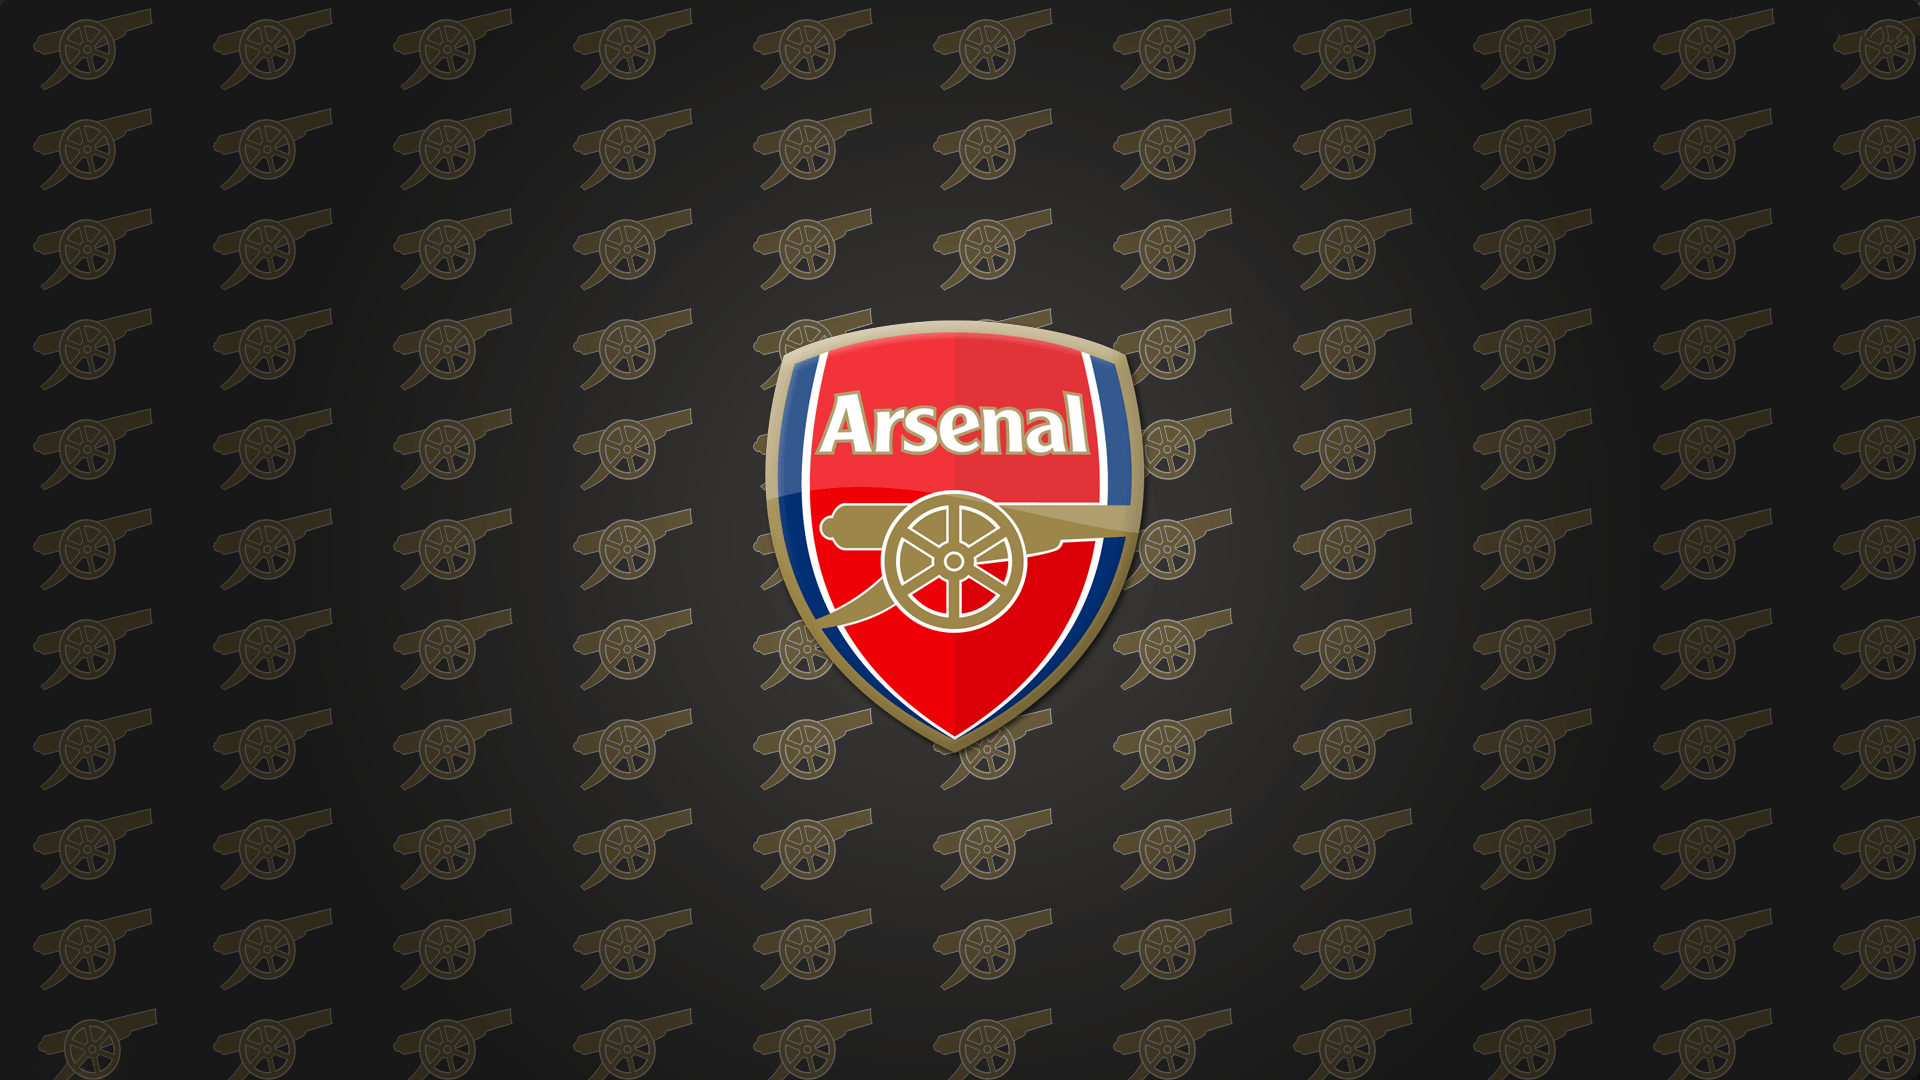 Download Full Hd Arsenal Desktop Wallpaper Images